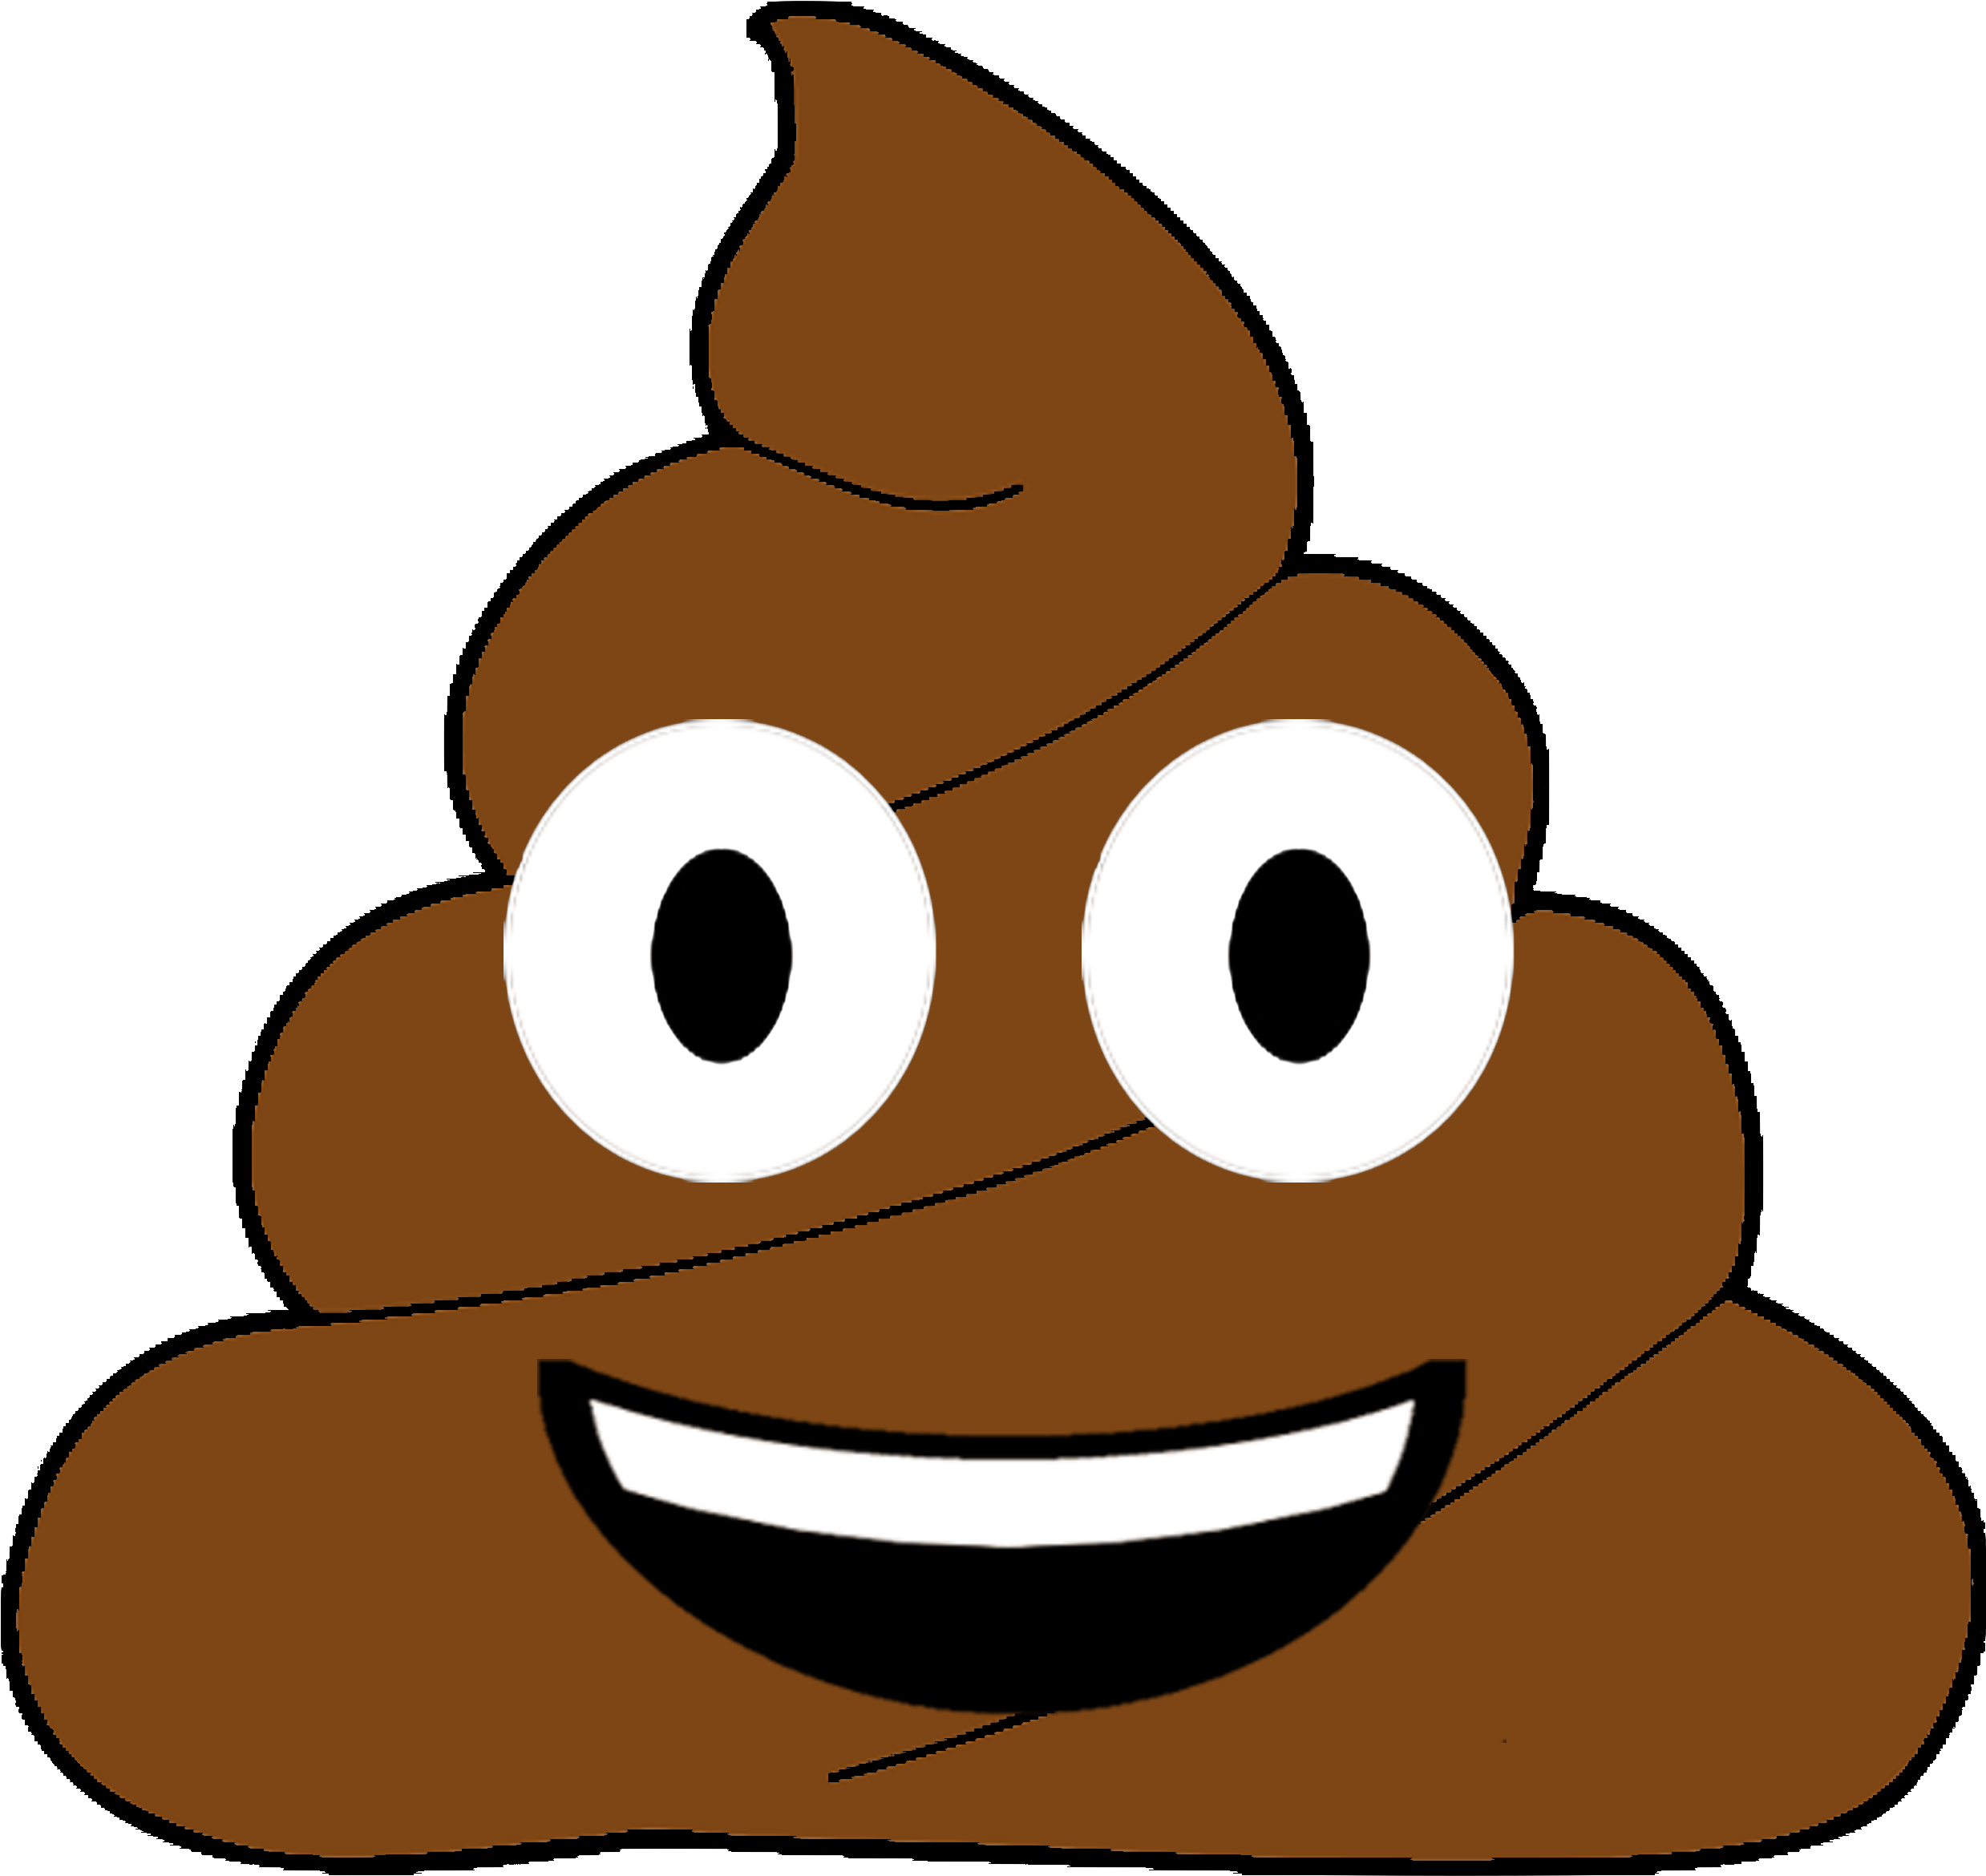 Brown Poop Emoji PNG descargar imagen